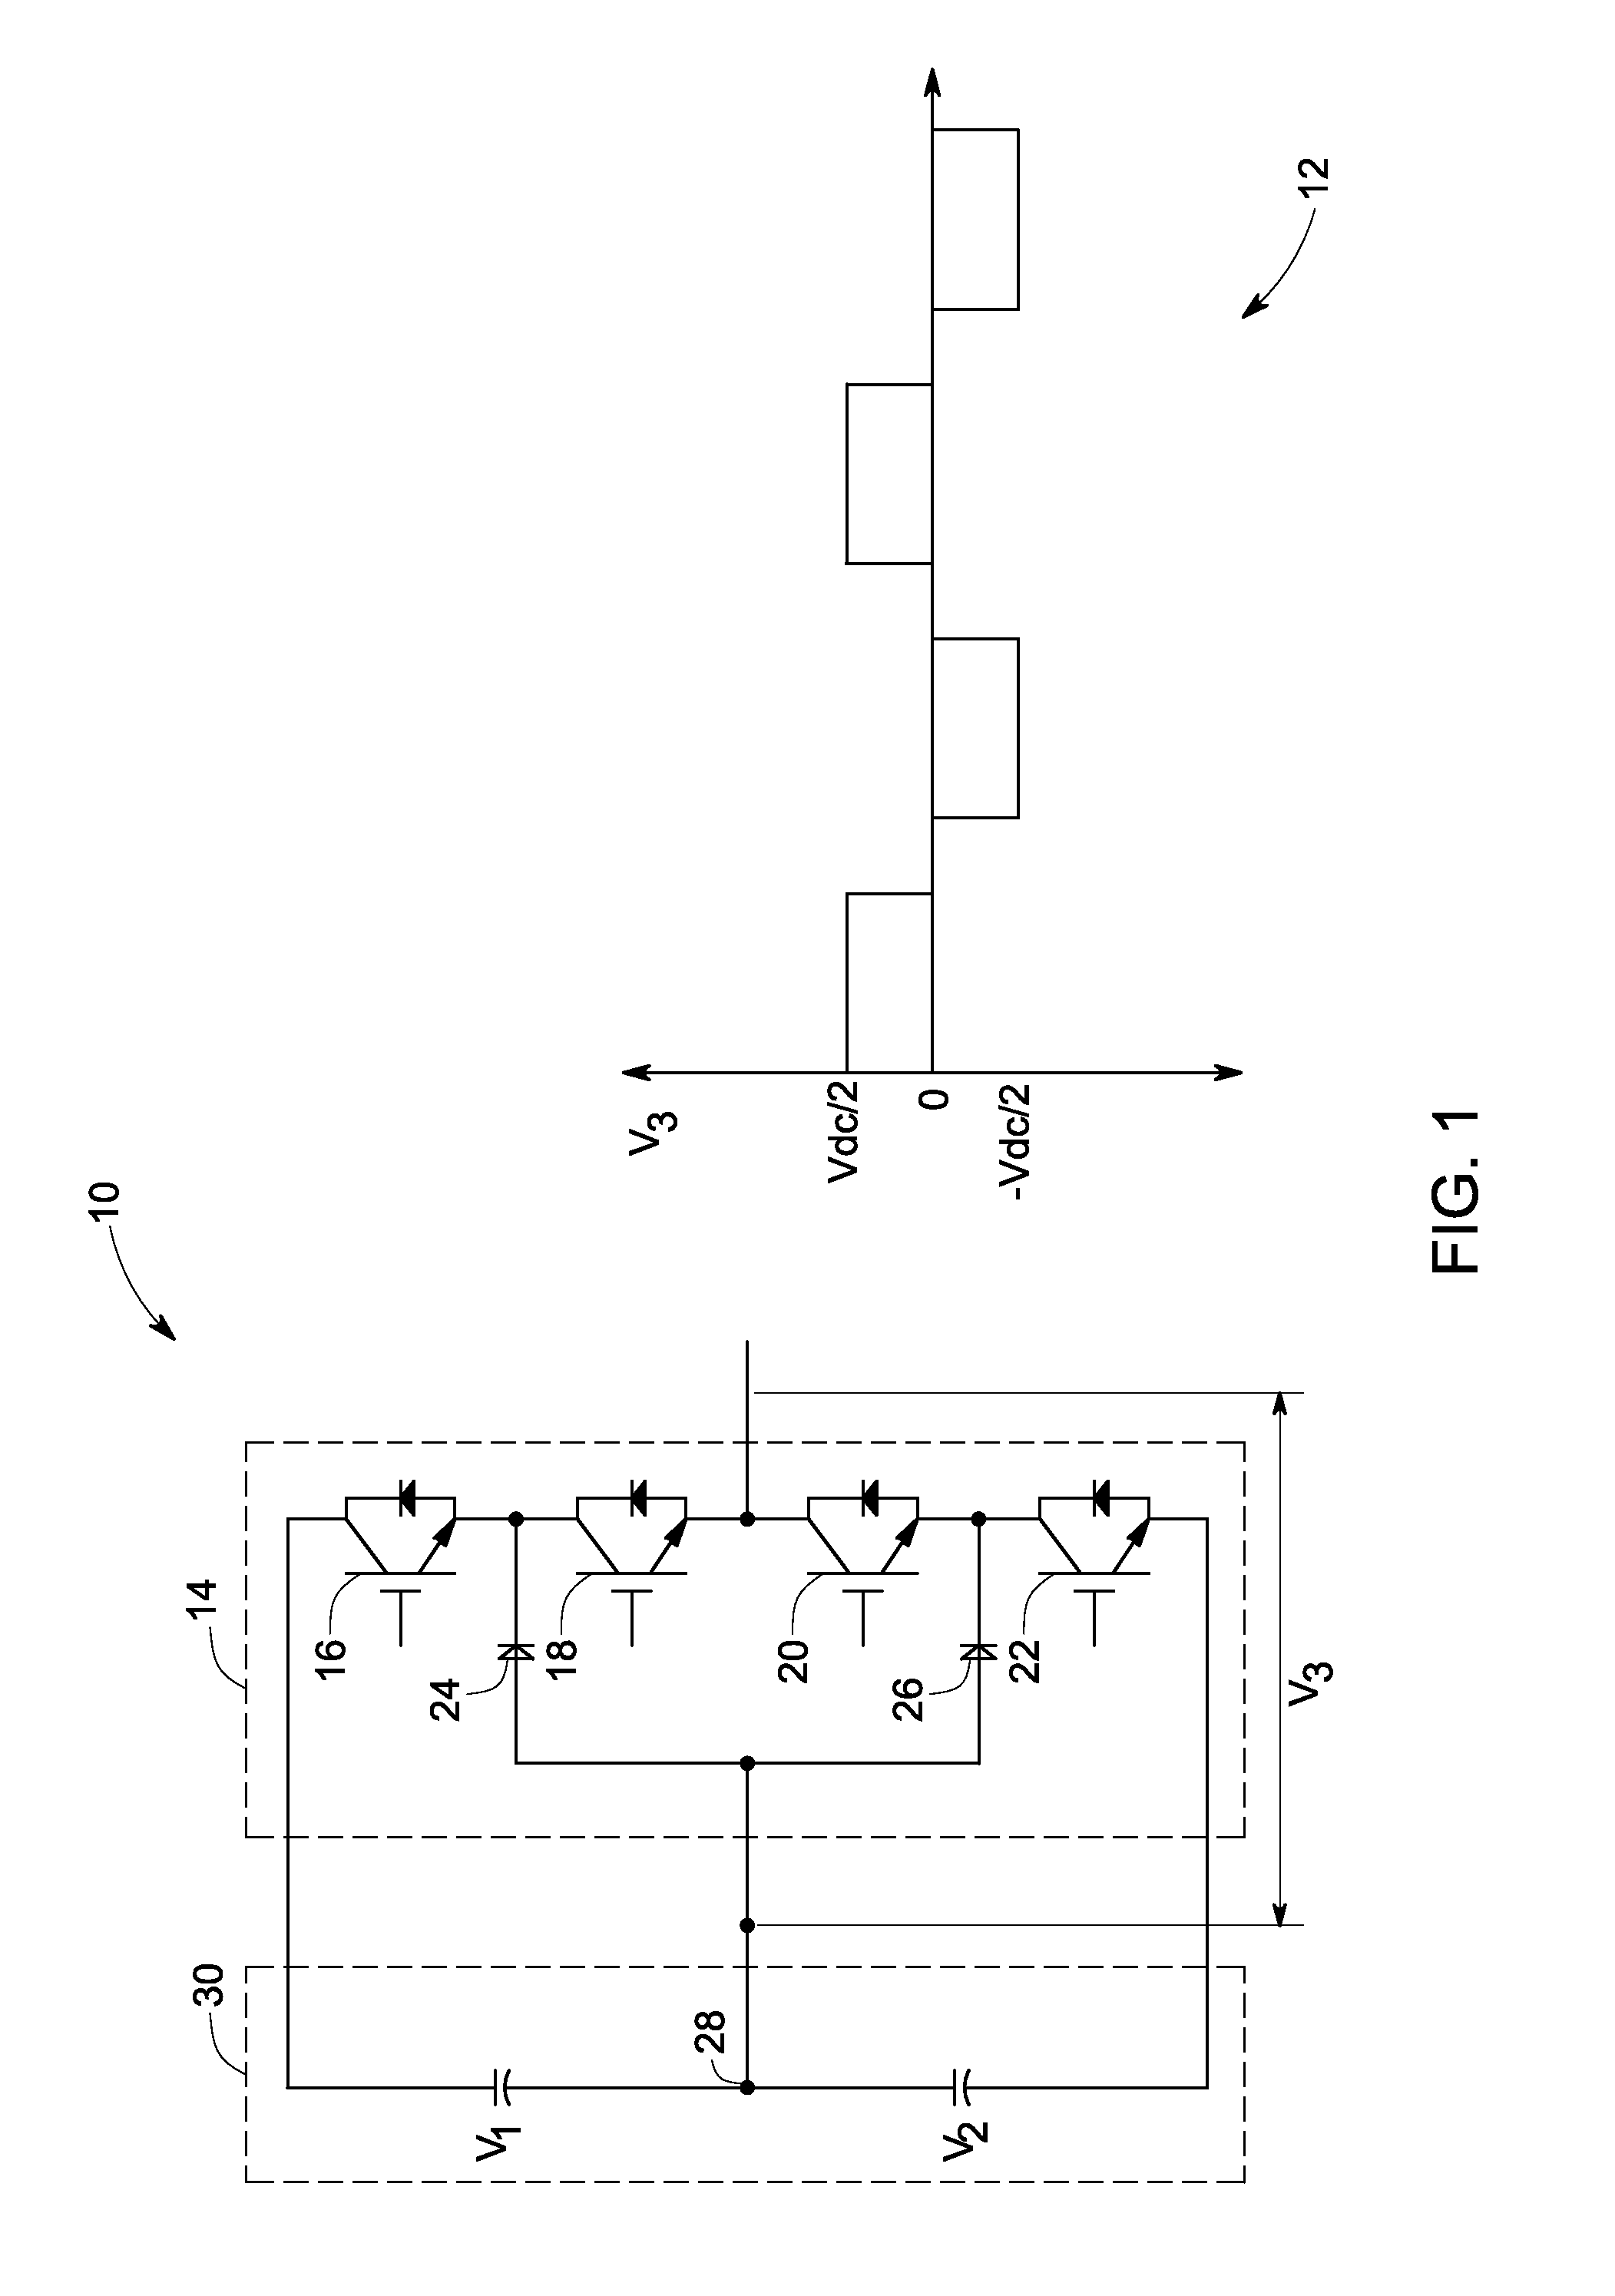 Dc-link voltage balancing system and method for multilevel converters